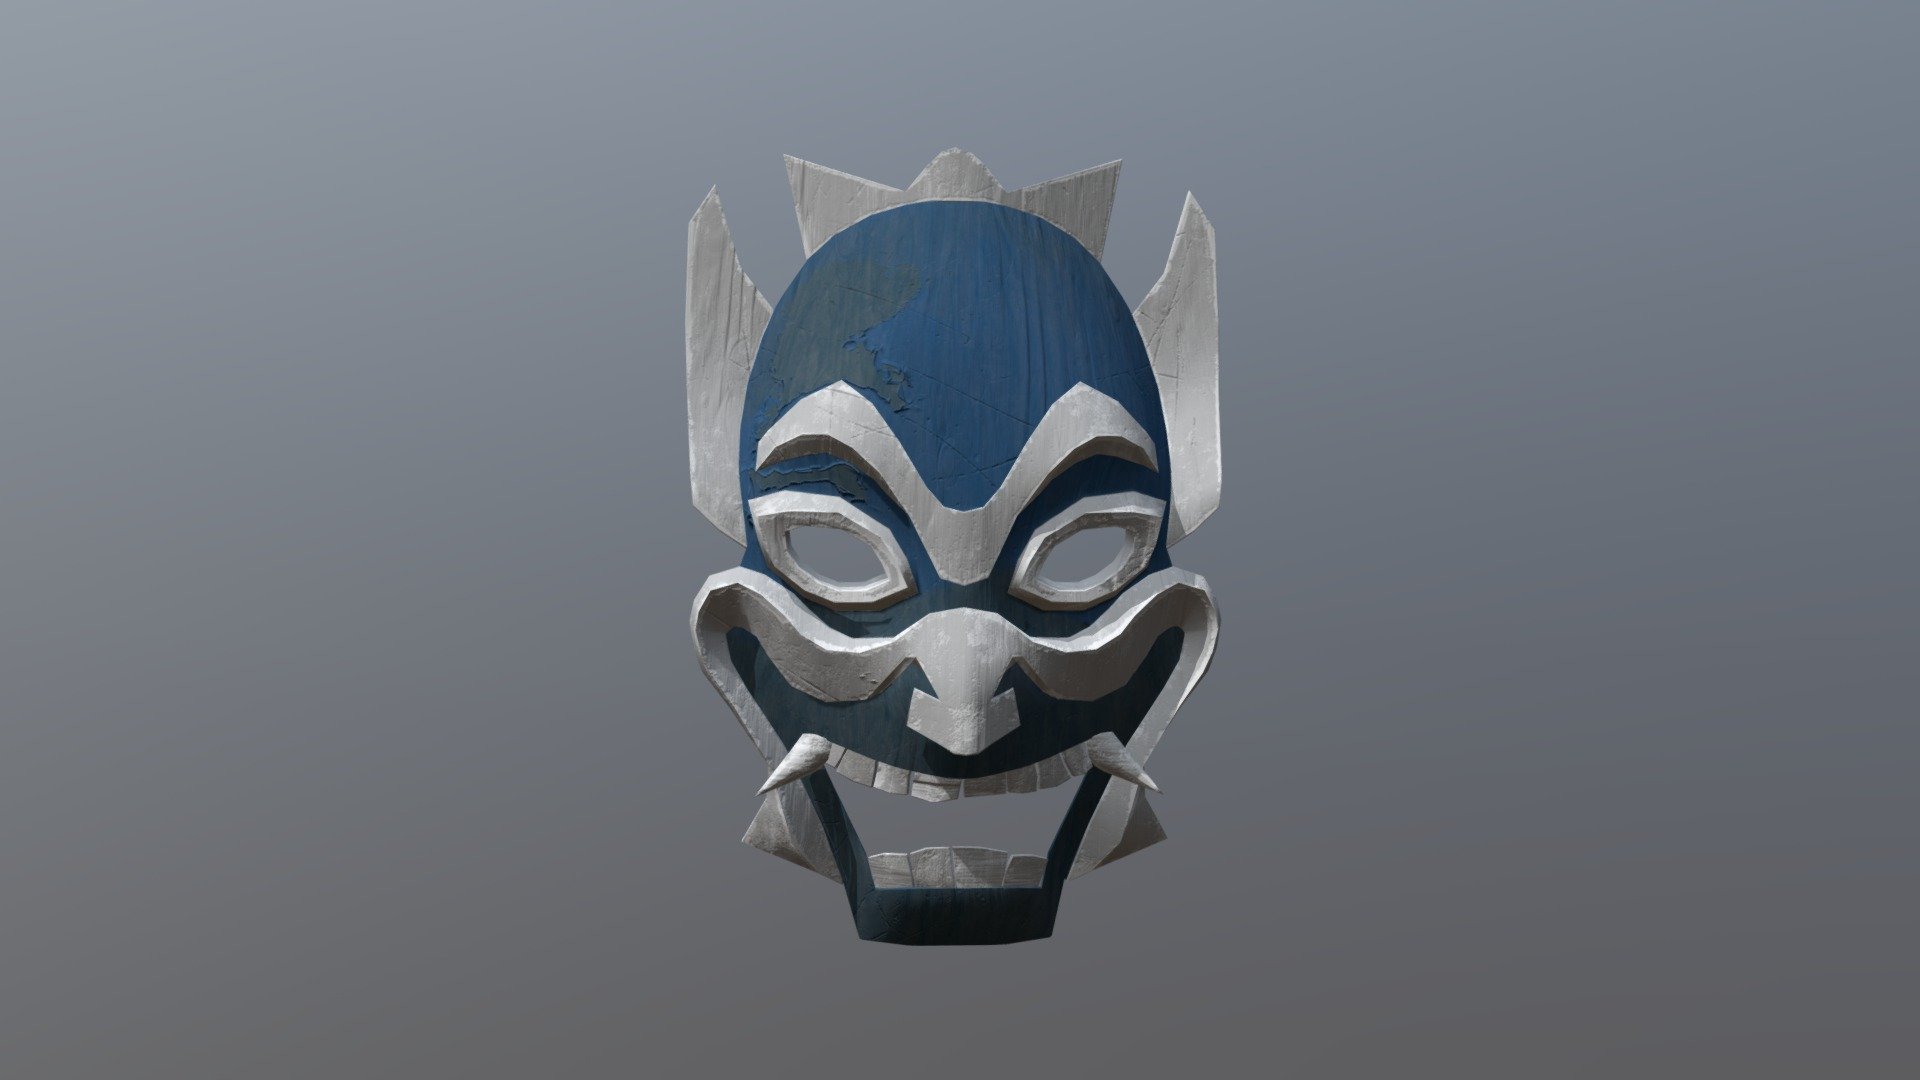 Blue Spirit Mask